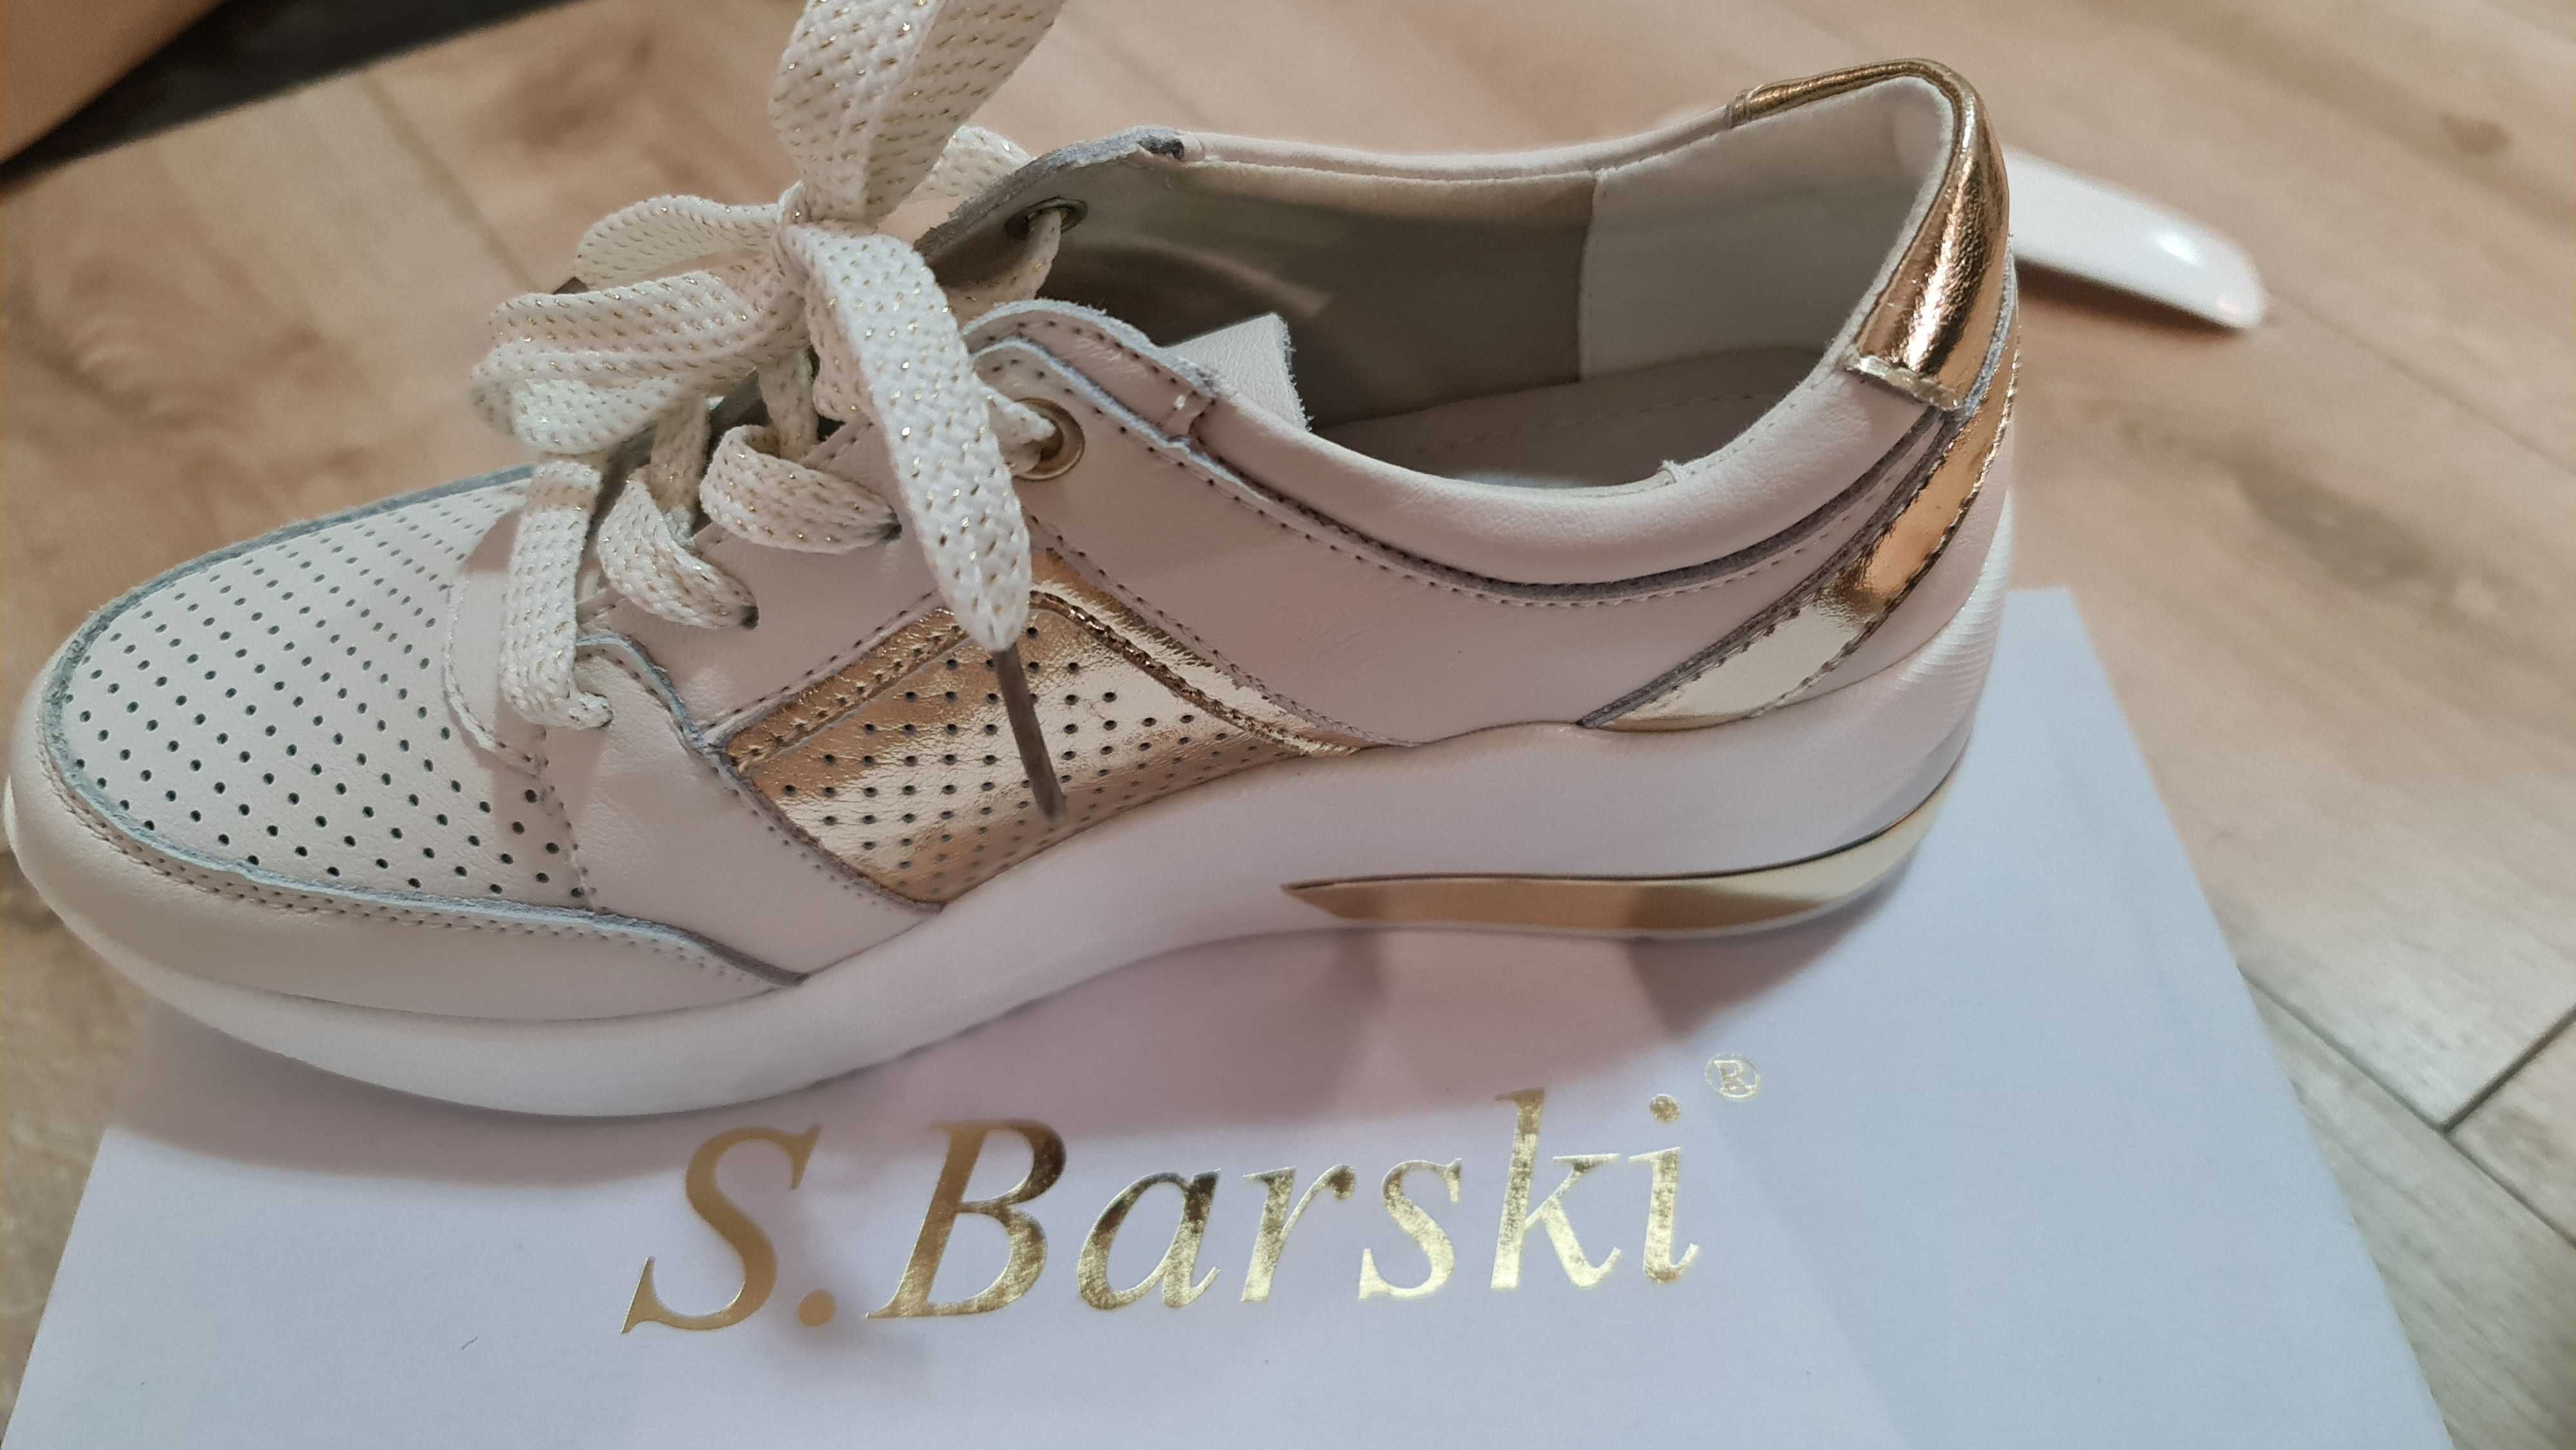 Nowe buty skórzane skóra naturalna S.Barski beżowo złote 37